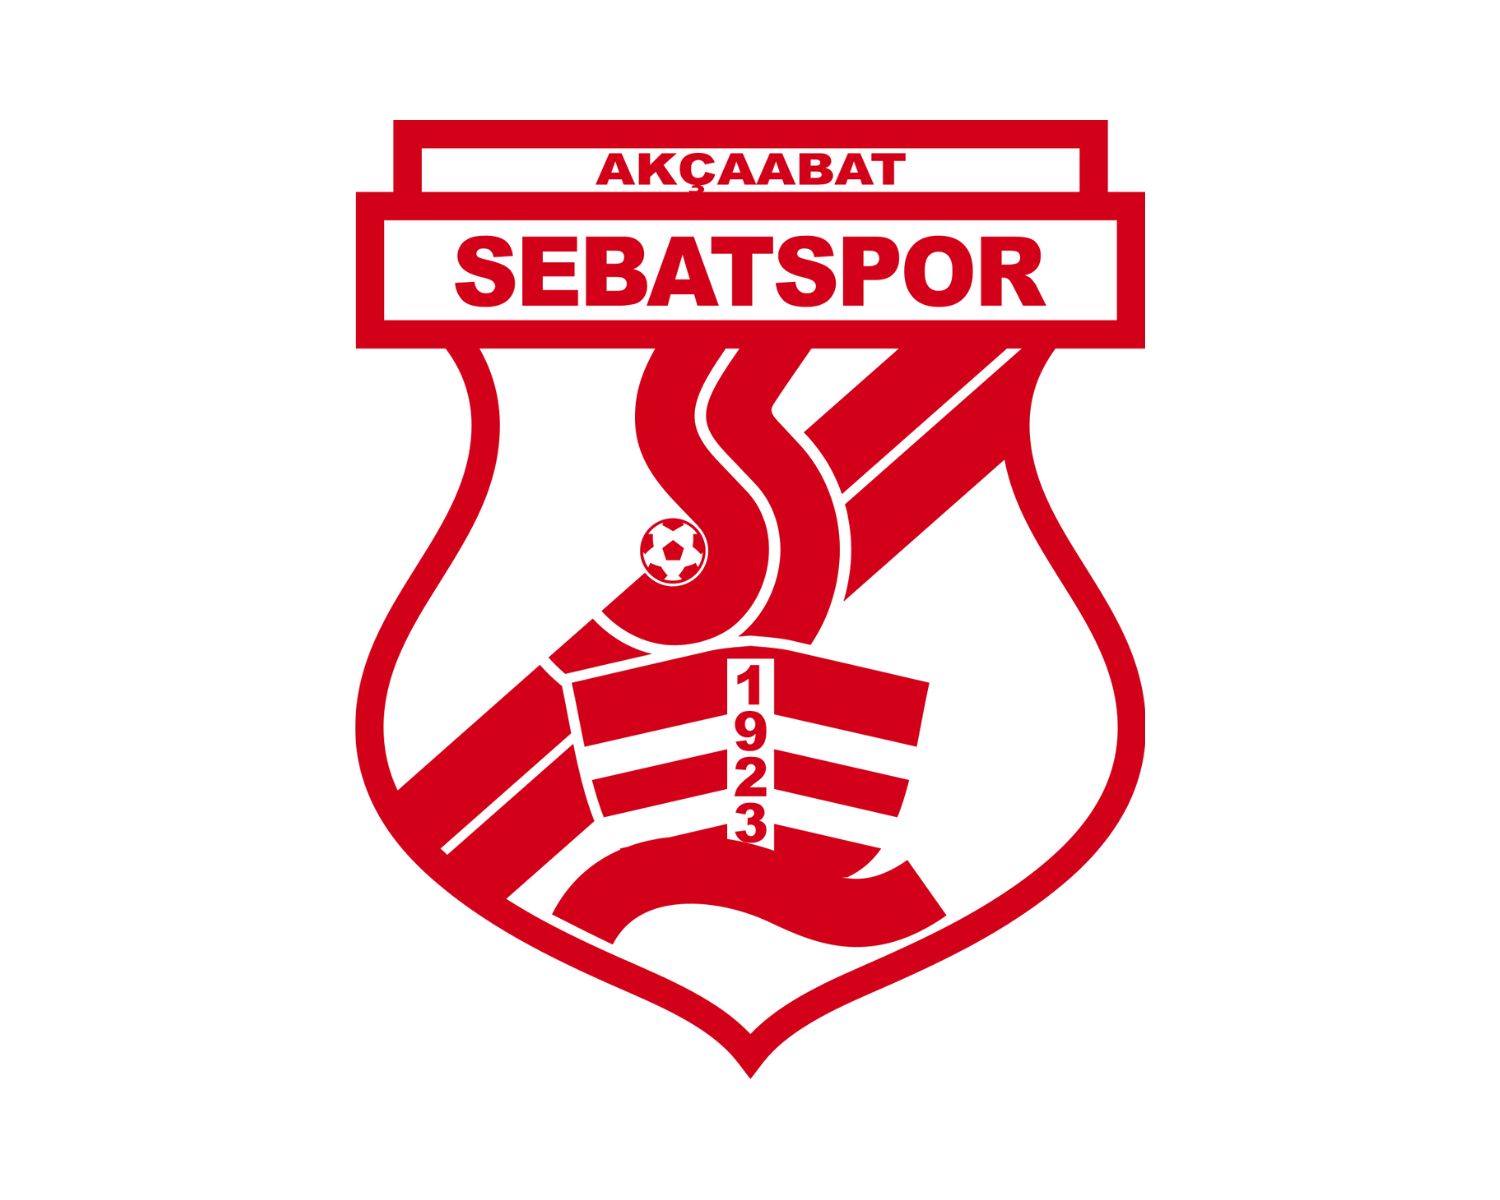 akcaabat-sebatspor-23-football-club-facts